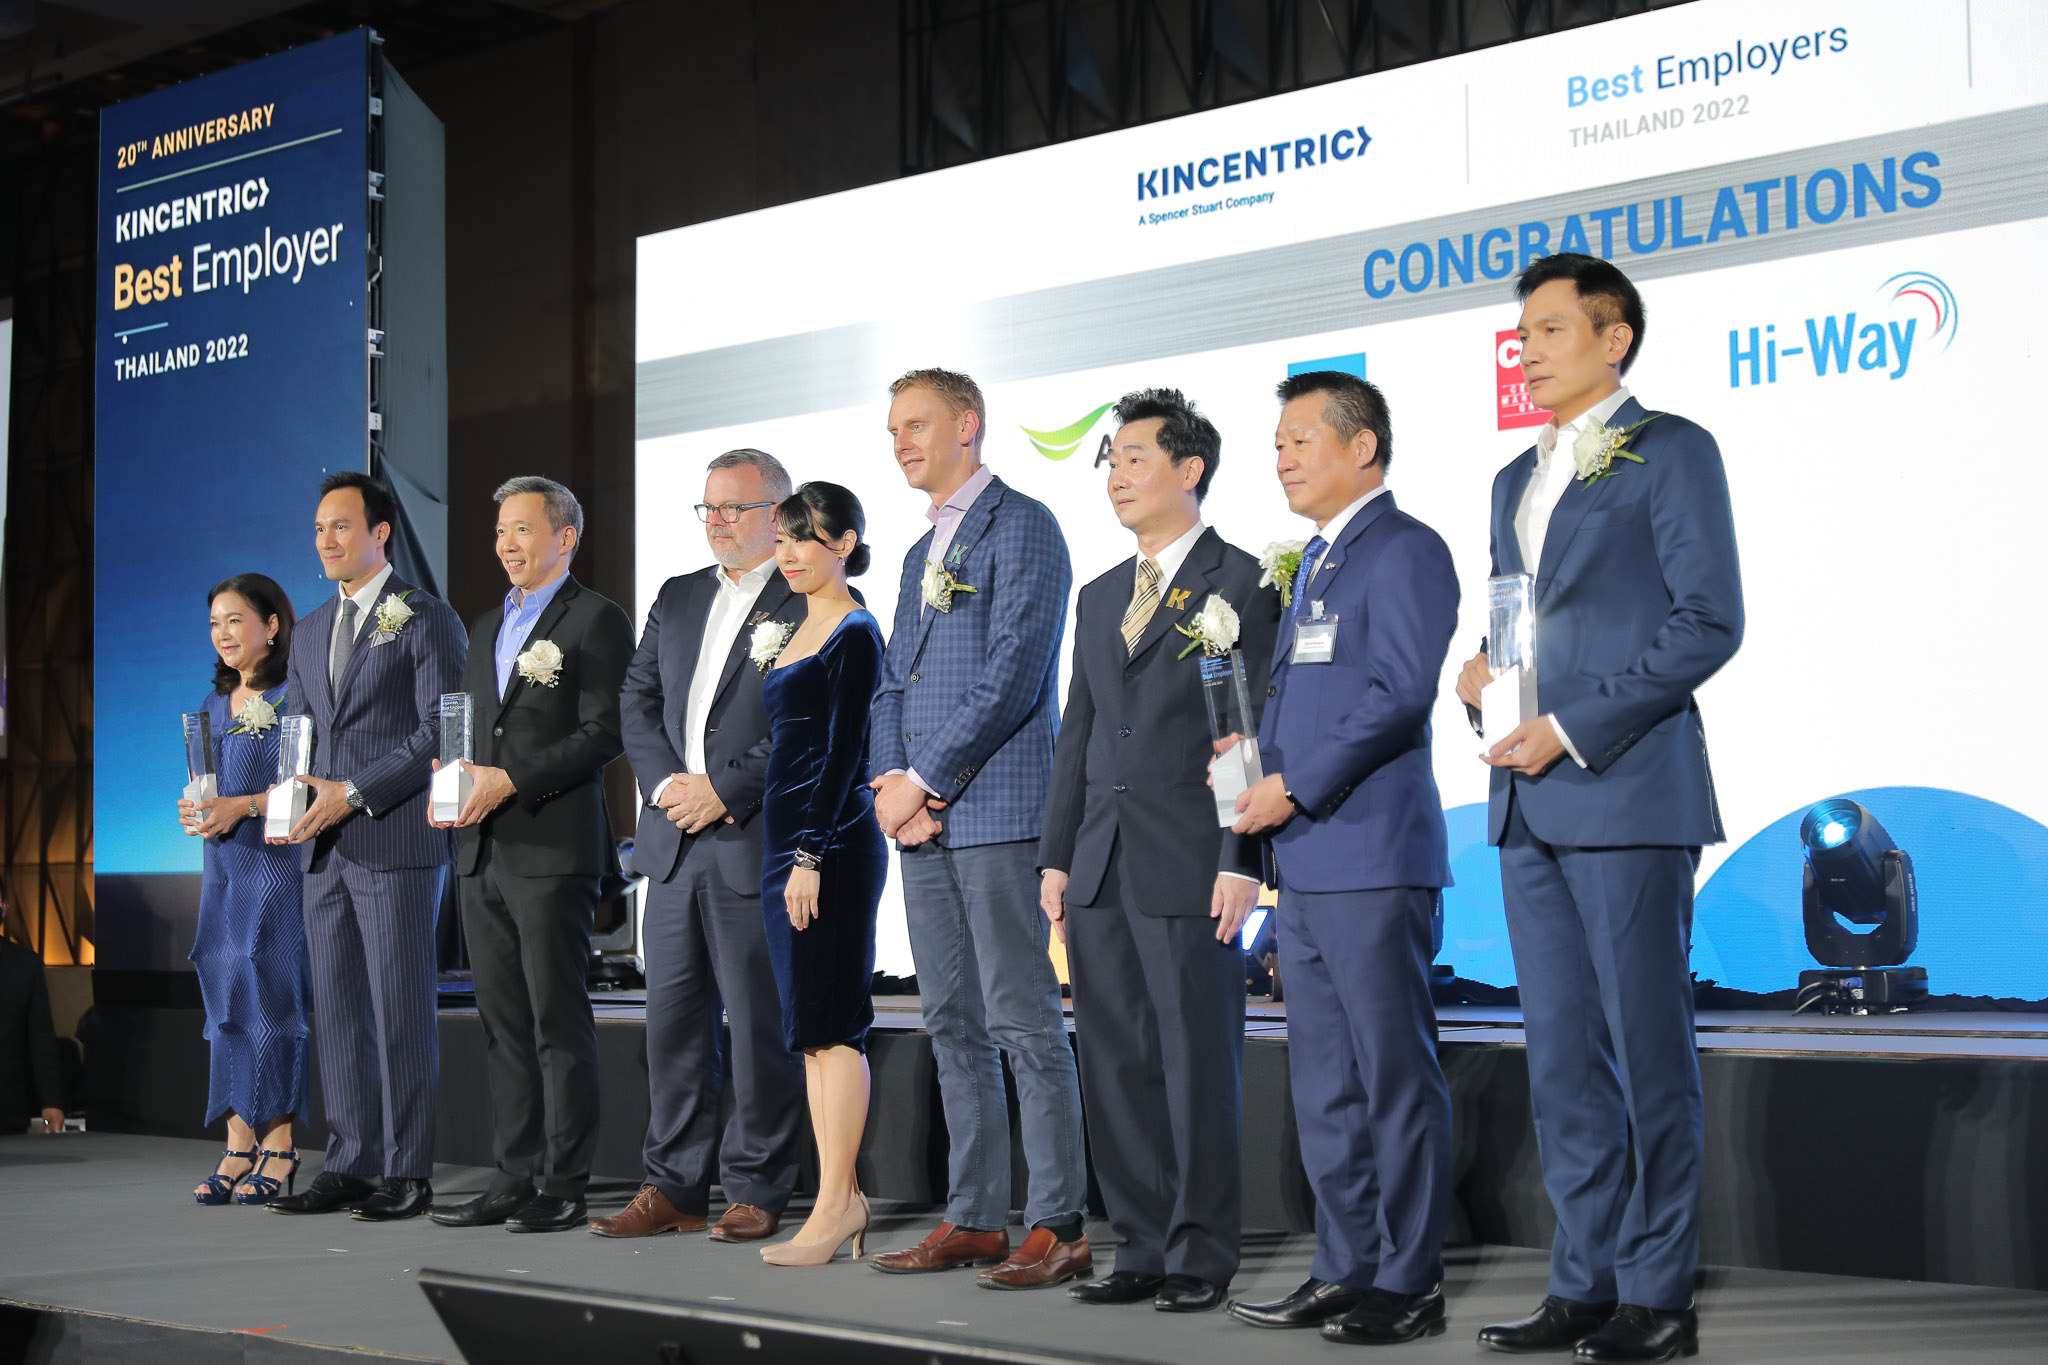 Kincentric Best Employers Thailand Awards 2022 : 26 องค์กรสุดยอดนายจ้างดีเด่นแห่งประเทศไทย